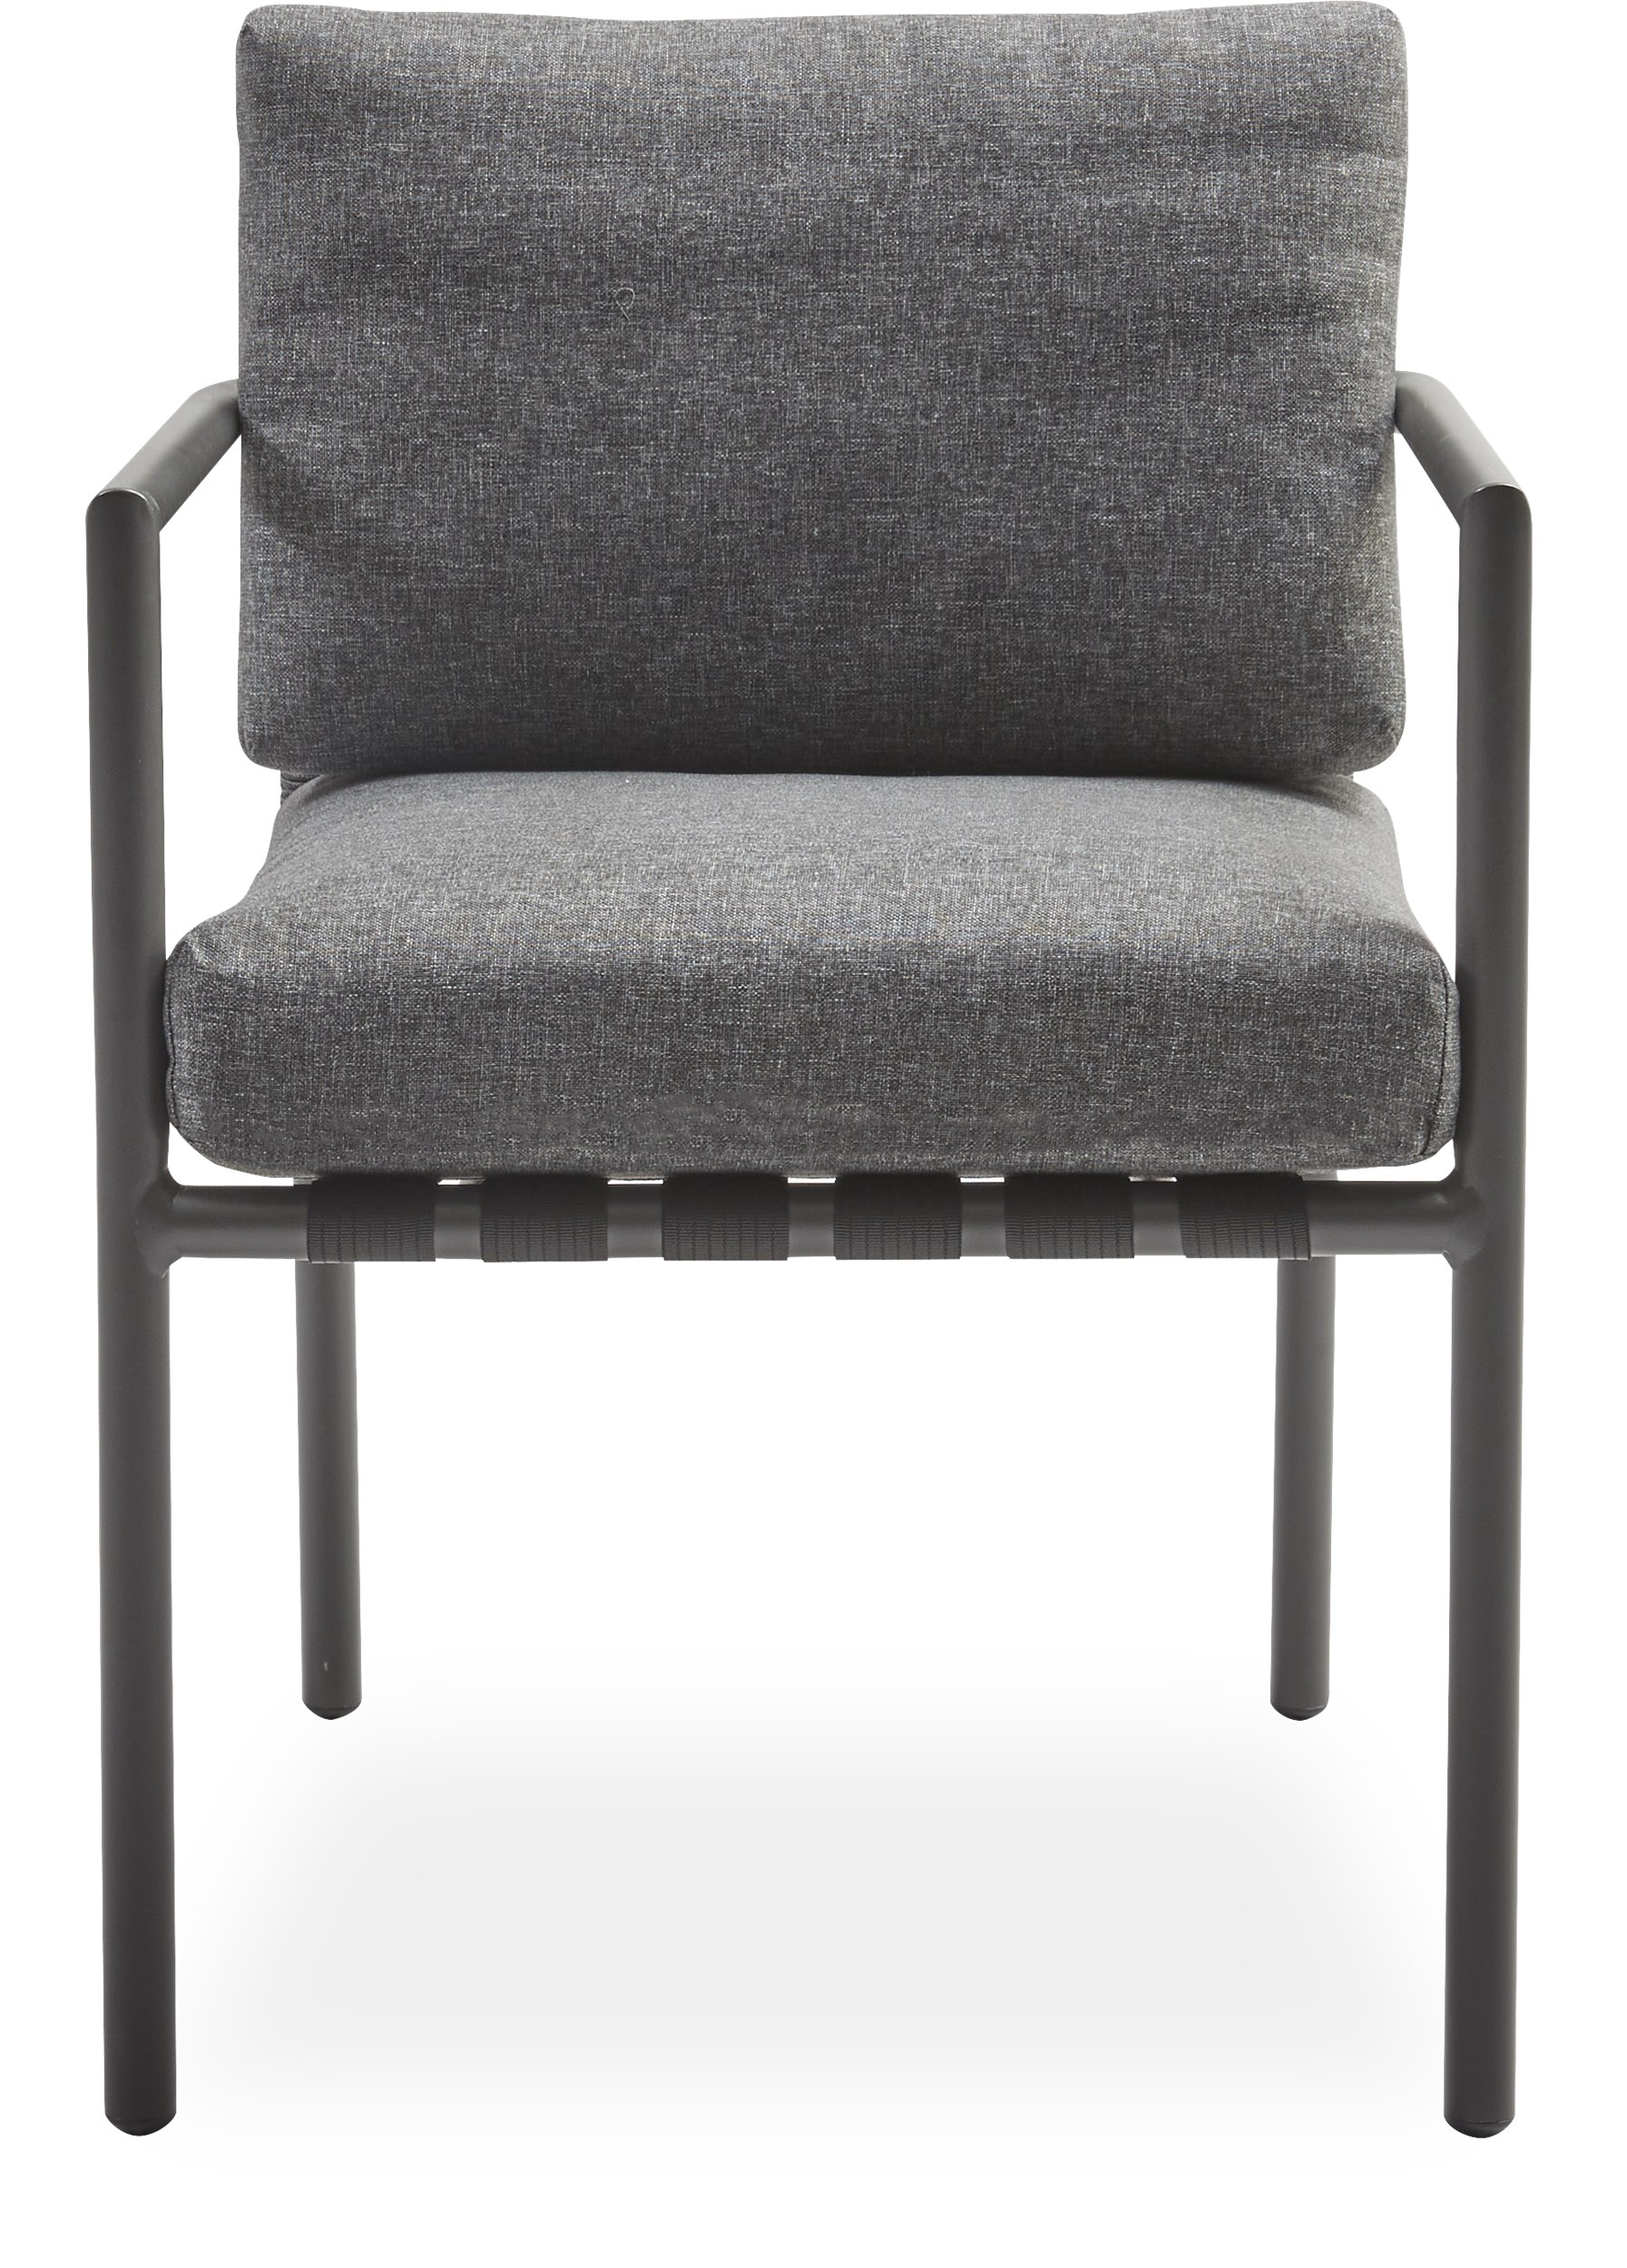 Horizon Havestol - Sæde i polyester strop flet, stel i mørkegrå aluminium og hynder i mørkegrå 190 g olefin